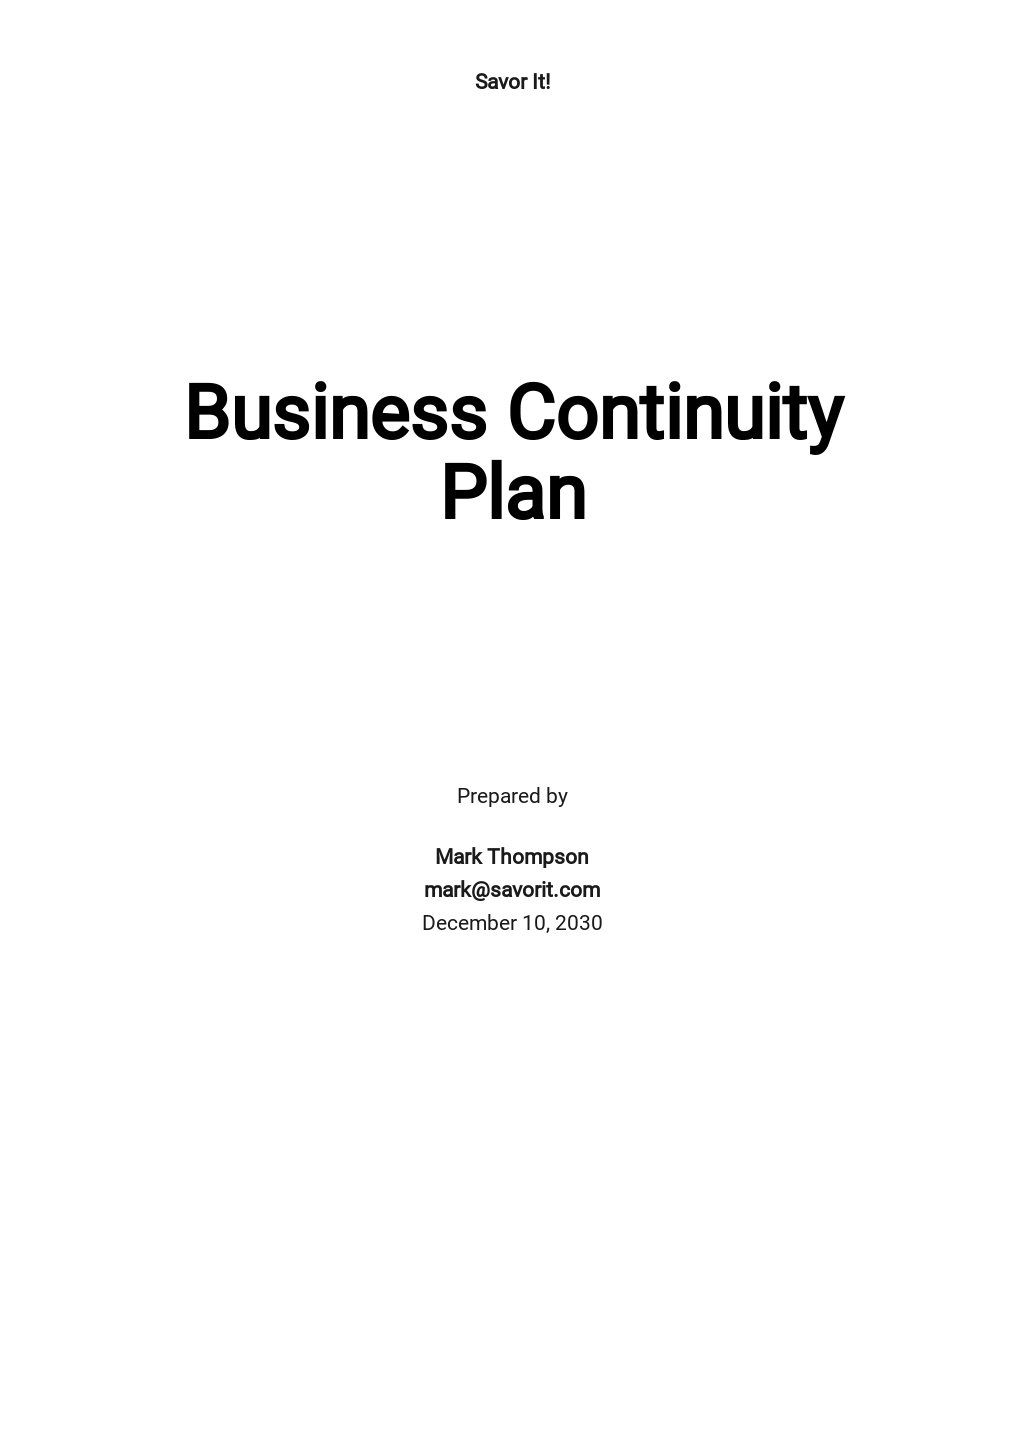 Business Continuity Plan Template.jpe